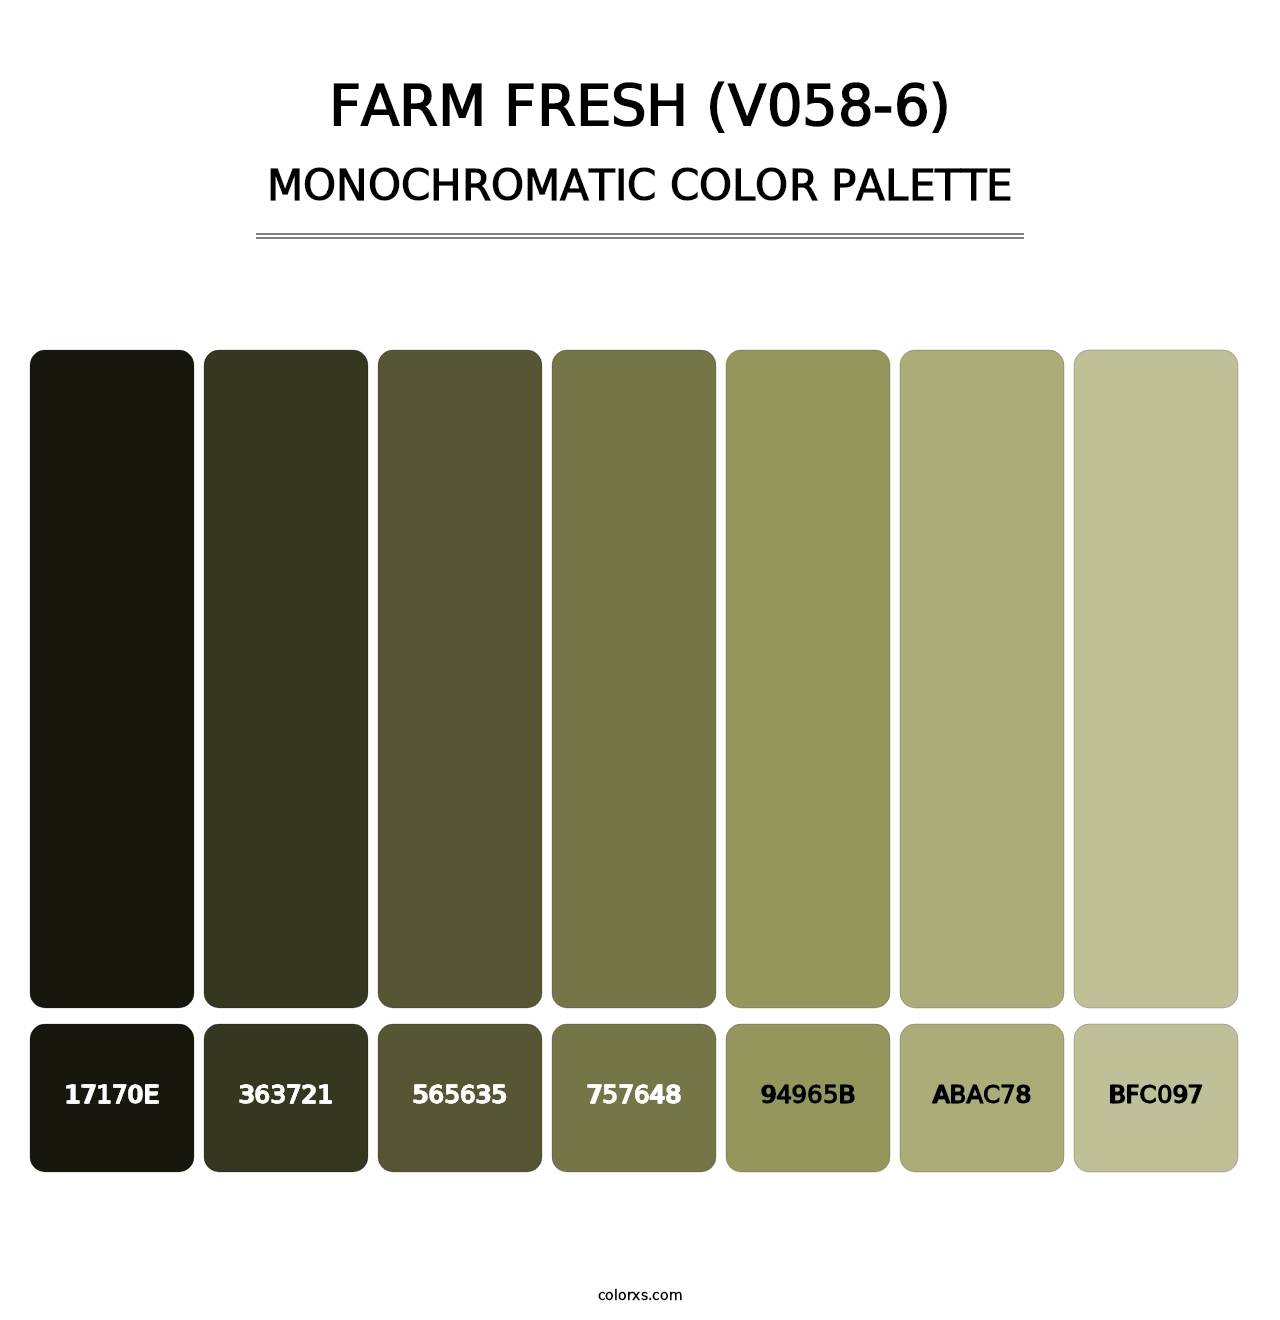 Farm Fresh (V058-6) - Monochromatic Color Palette